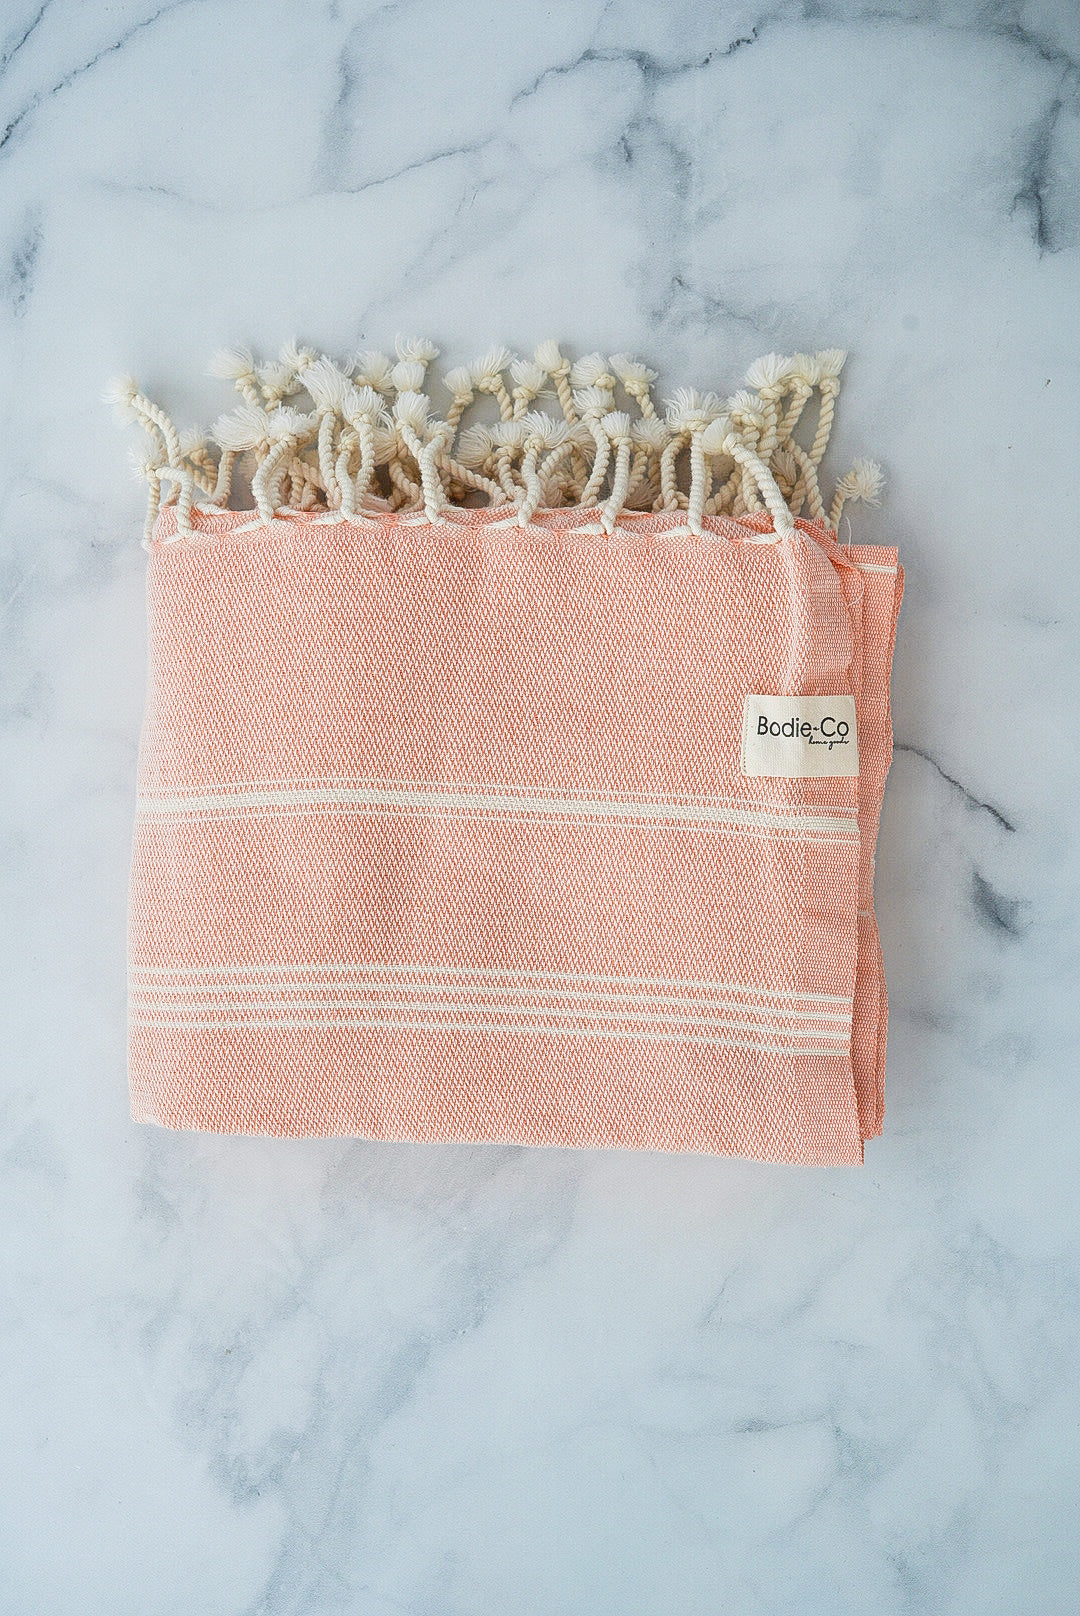 QUINN Towels - The Storehouse Shop